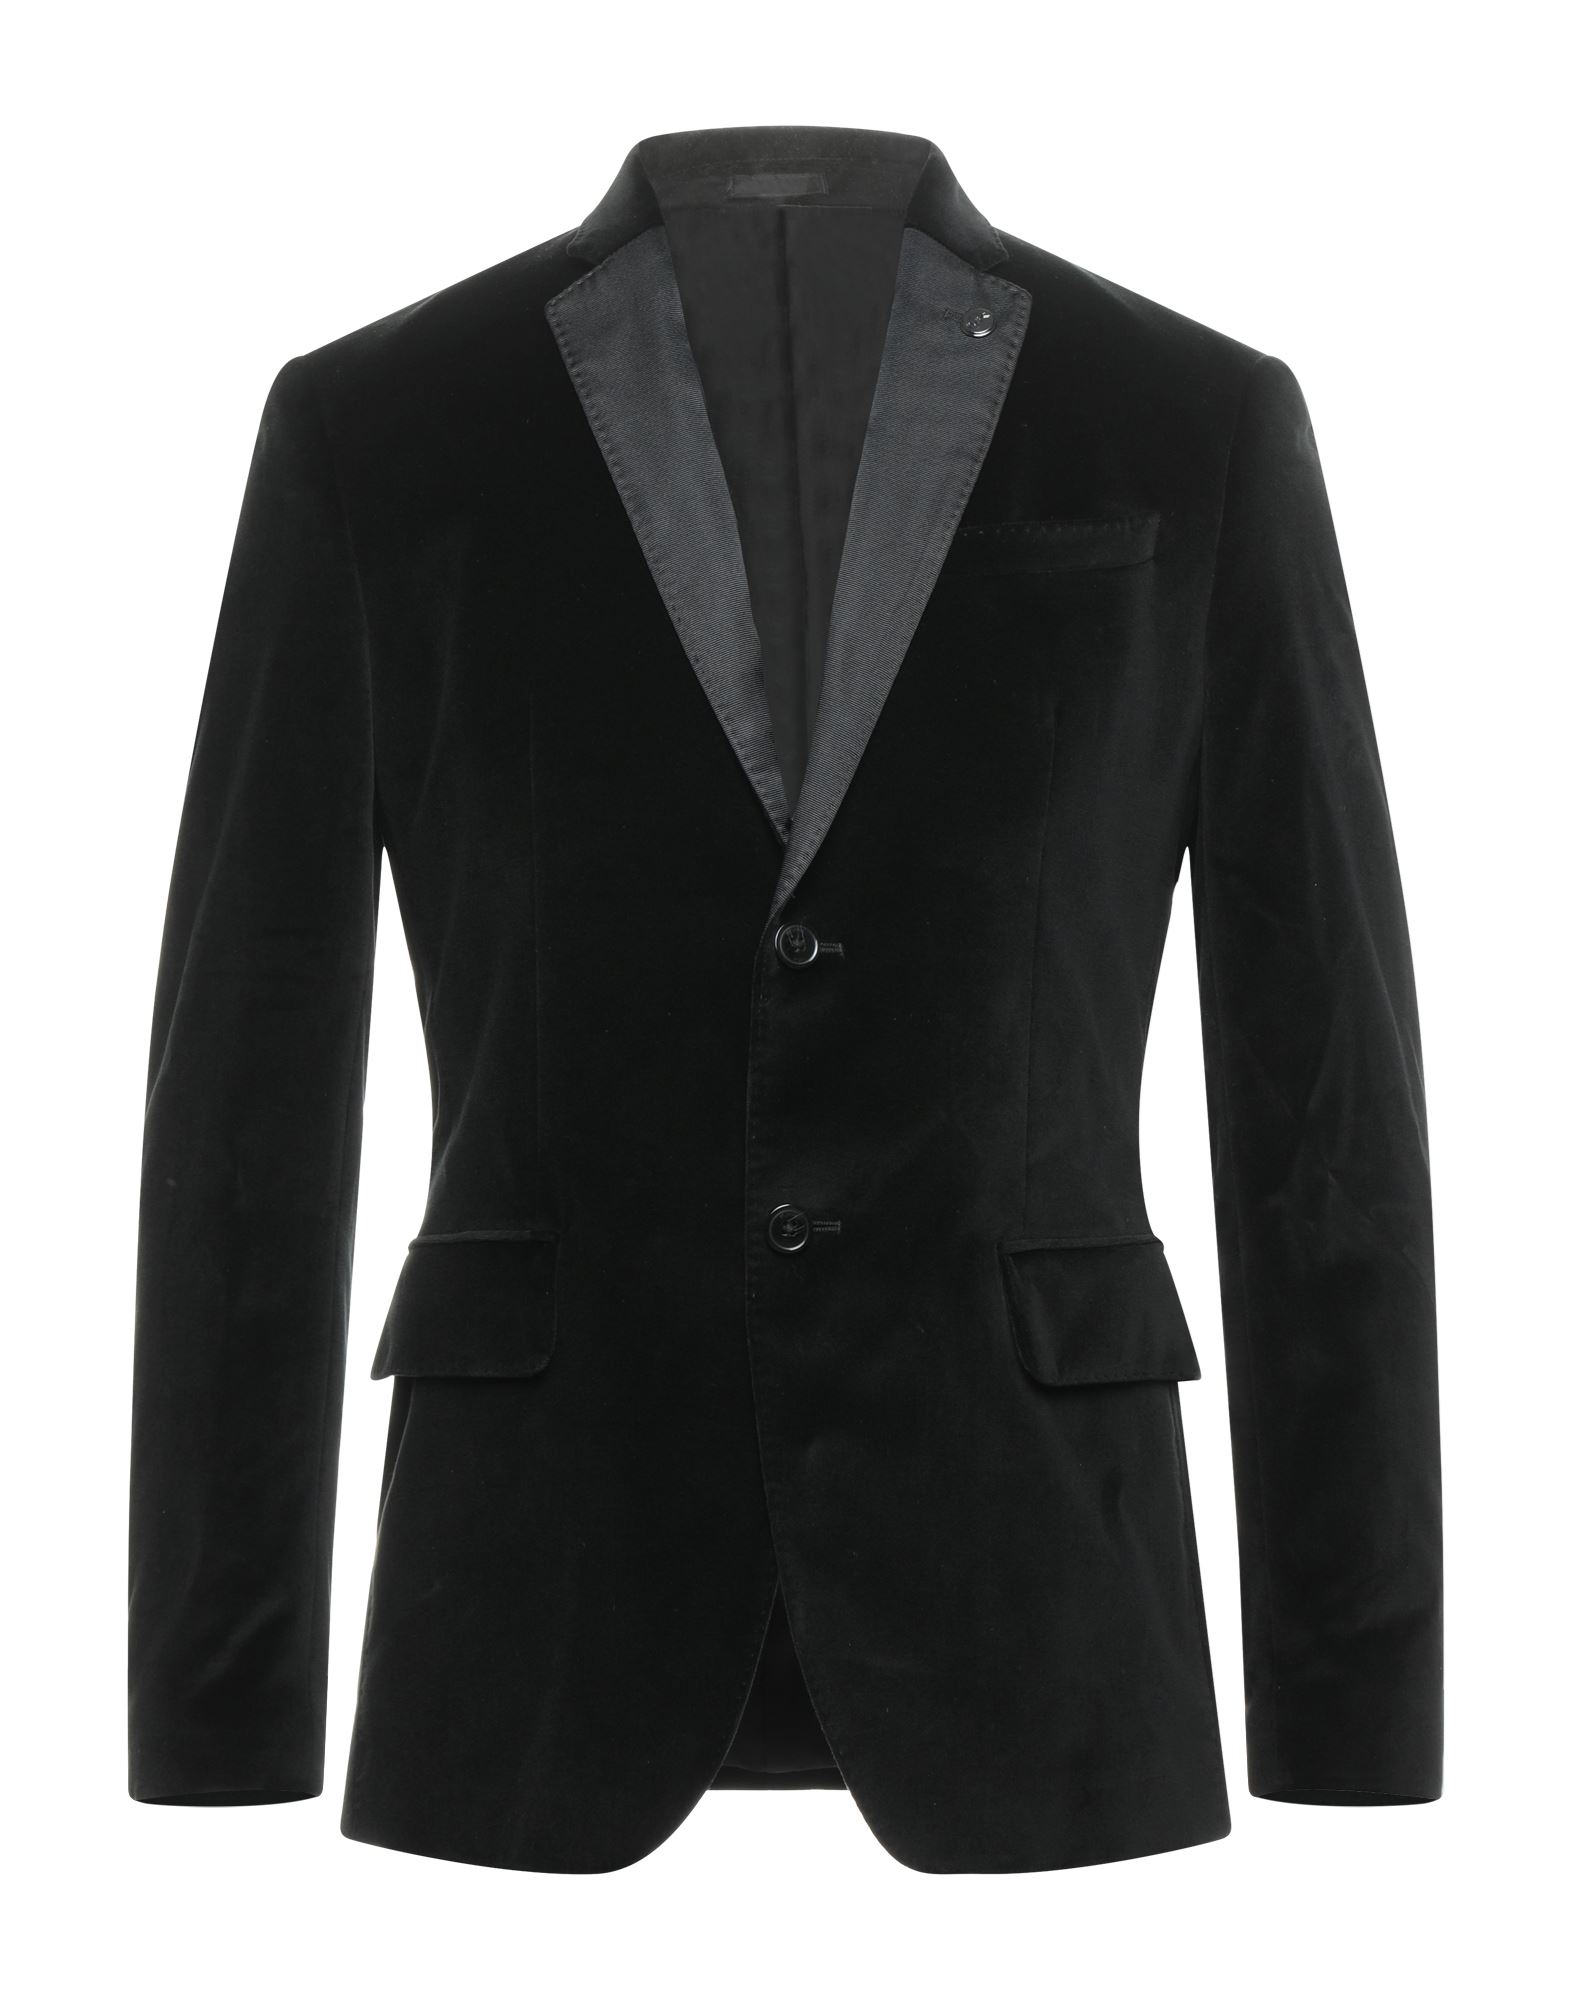 Michael Kors Mens Suit Jackets In Black | ModeSens